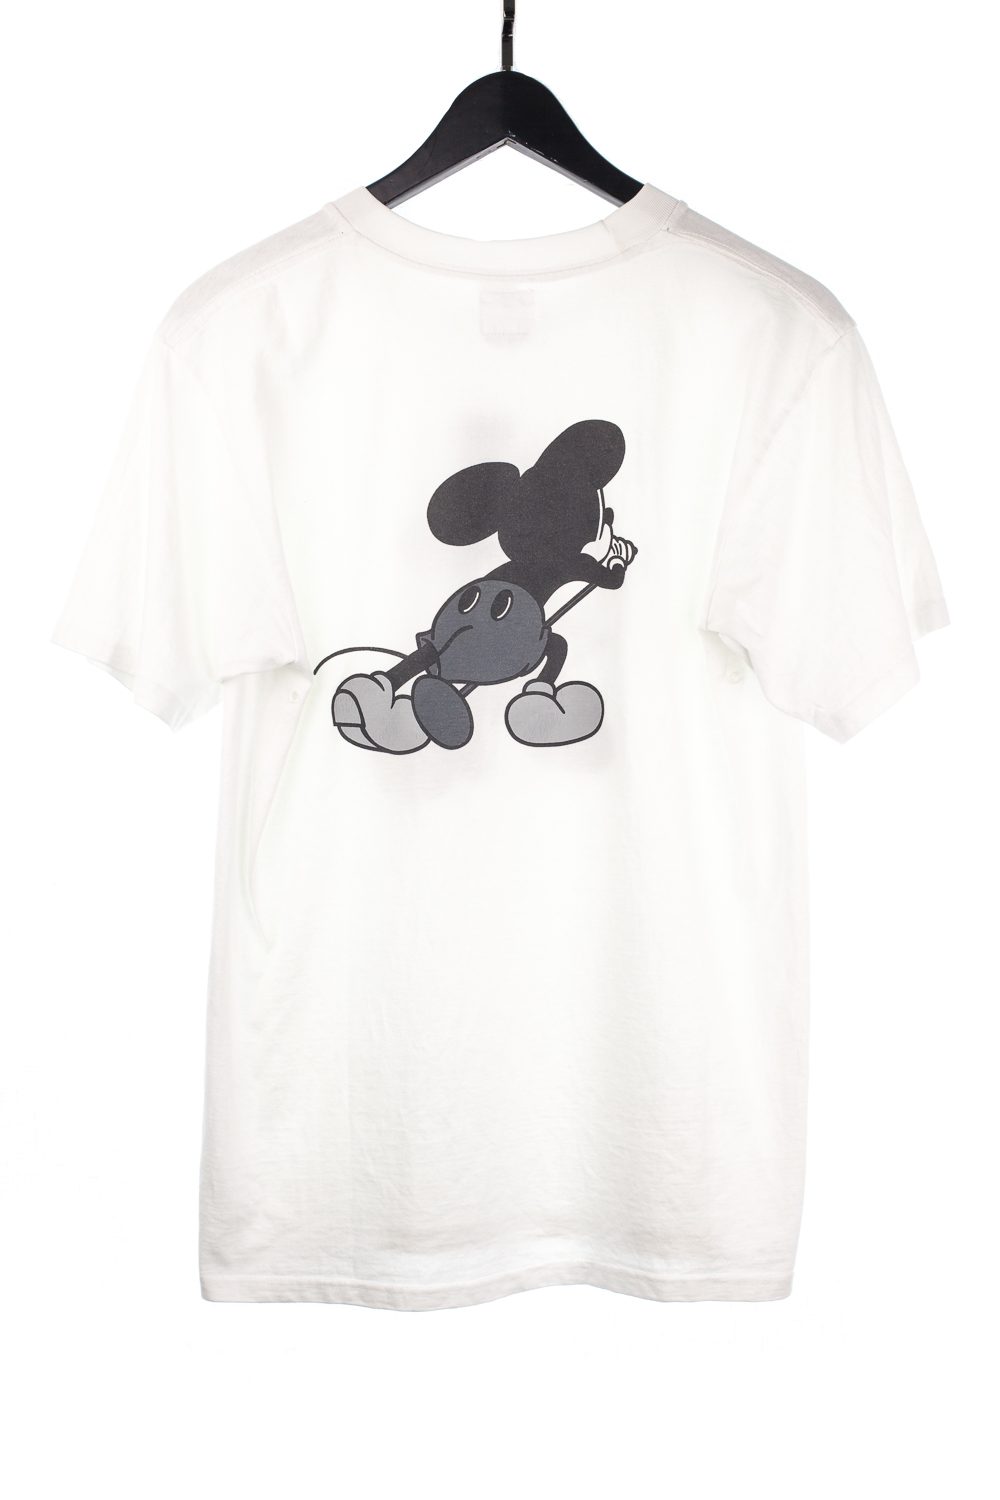 00 Cobain Mickey Shirt